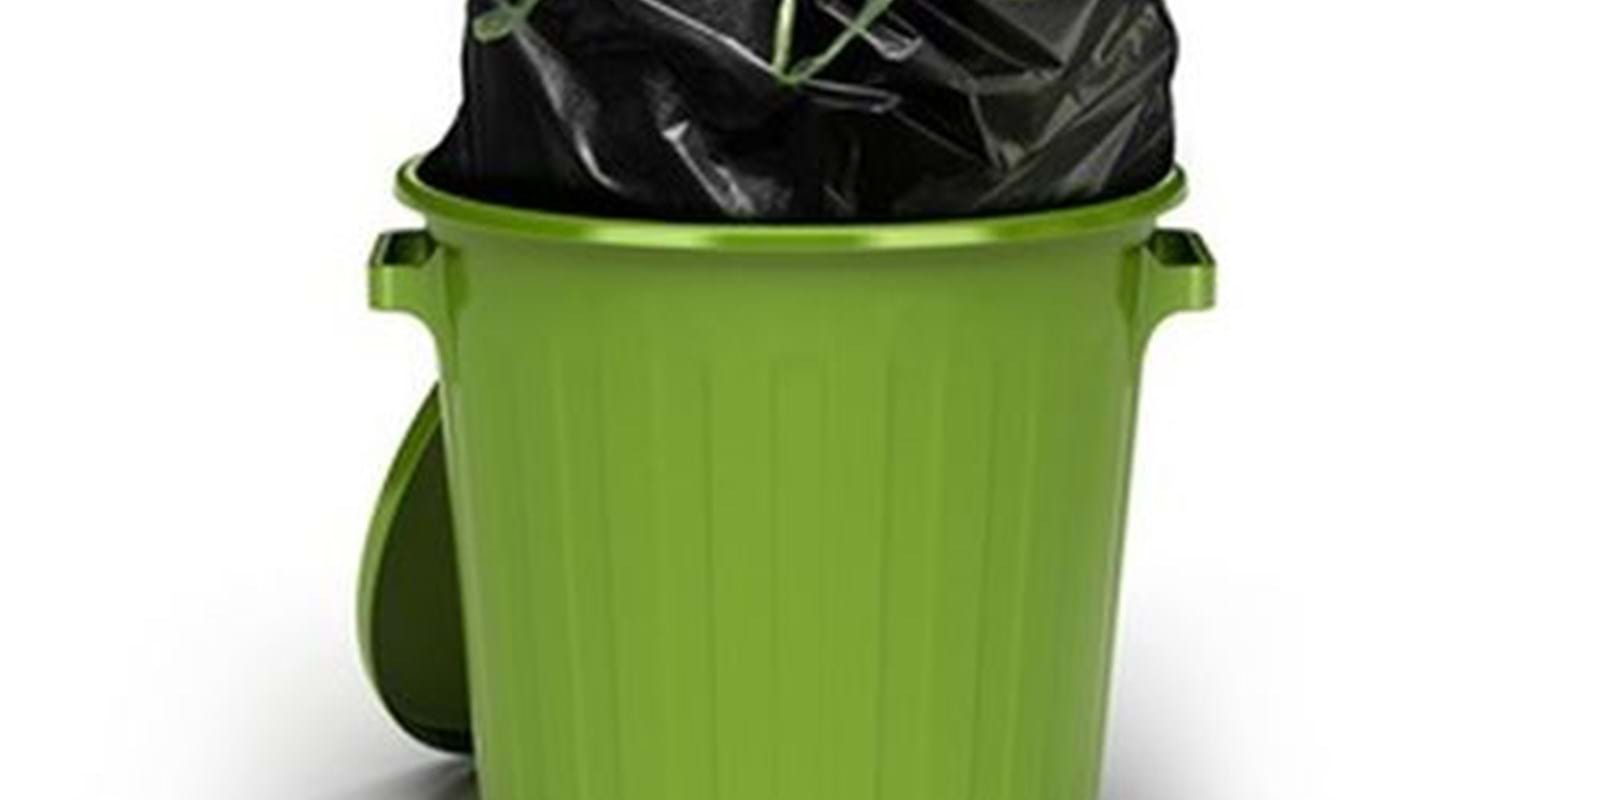 Waste management is a municipal concern